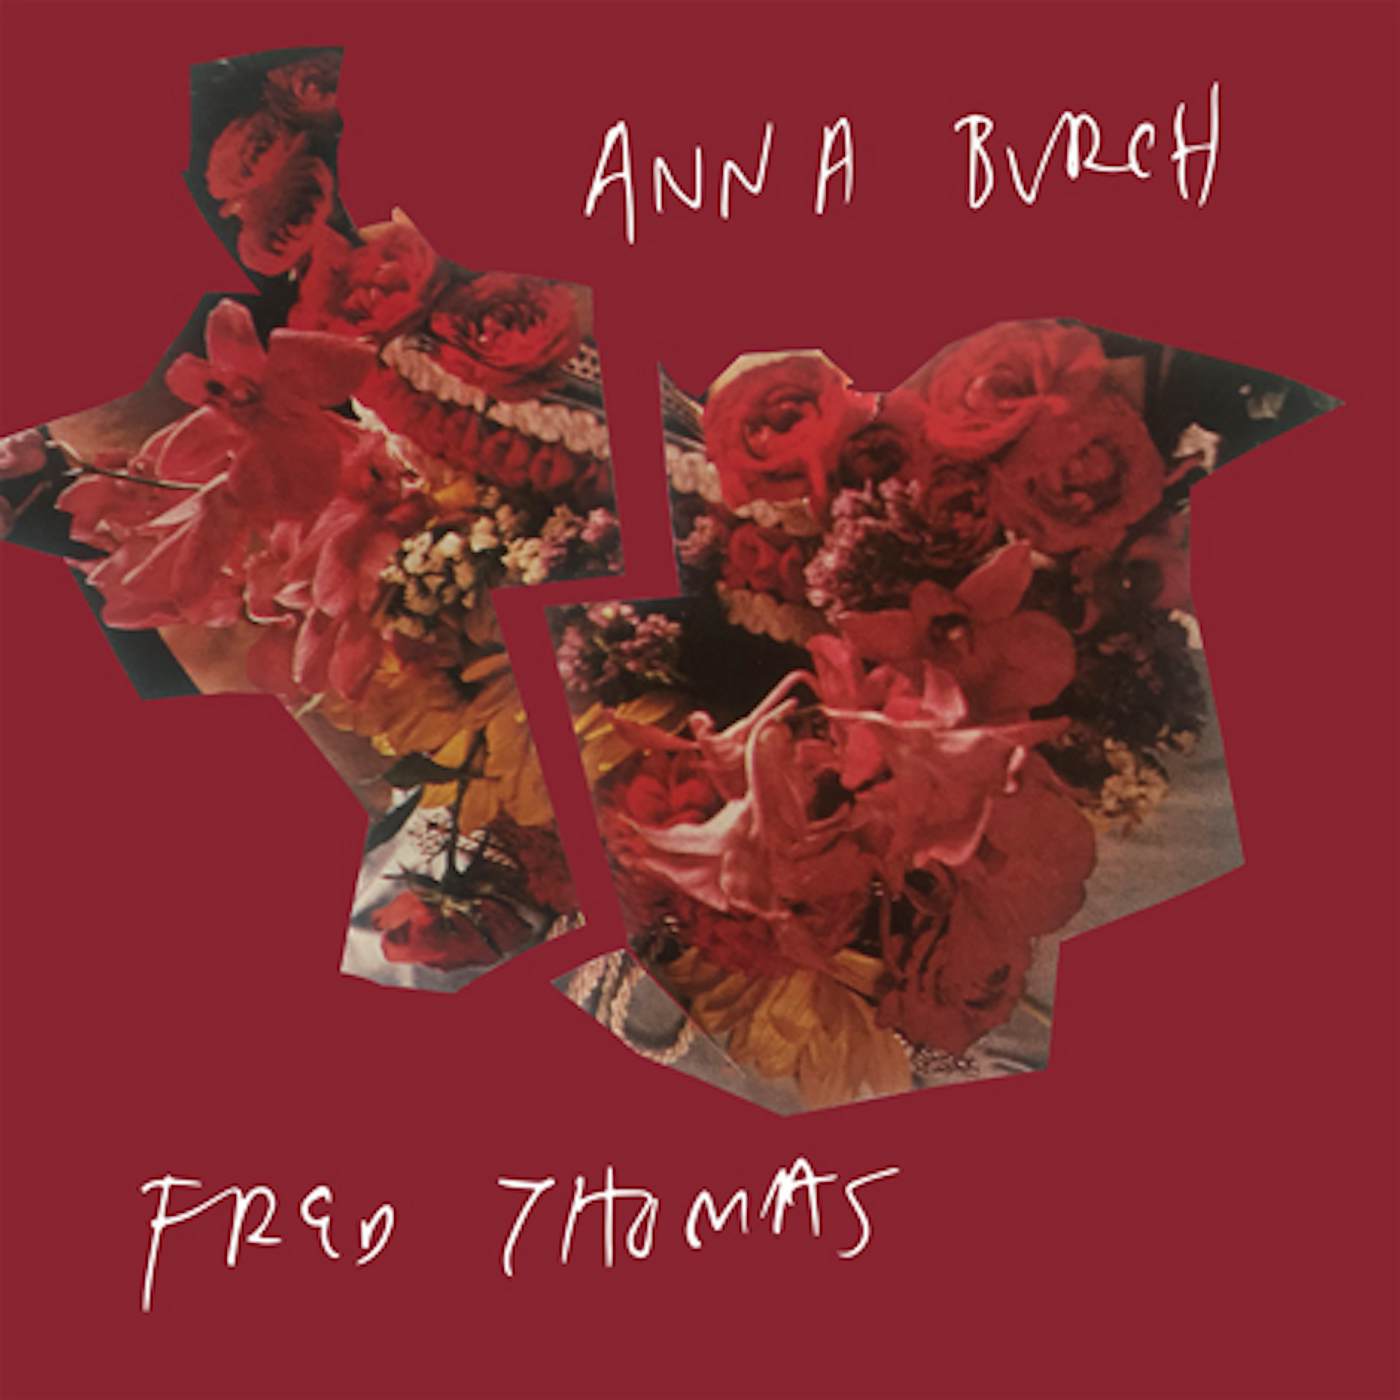 Fred Thomas/Anna Burch Split